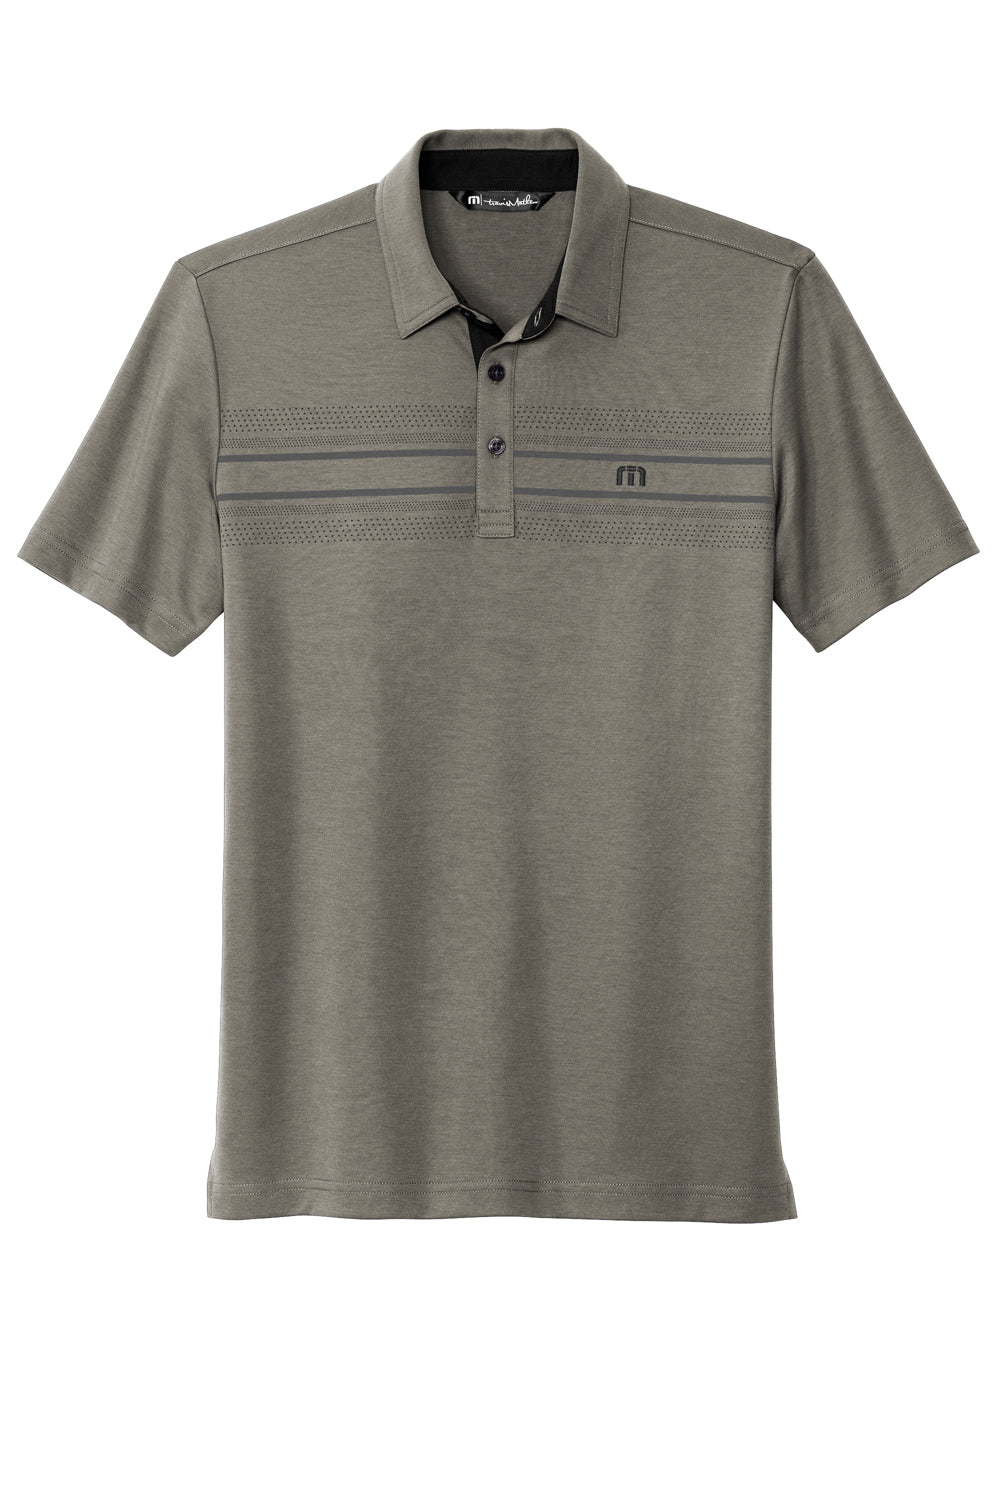 TravisMathew TM1MW450 Mens Monterey Wrinkle Resistant Chest Stripe Short Sleeve Polo Shirt Quiet Shade Grey Flat Front